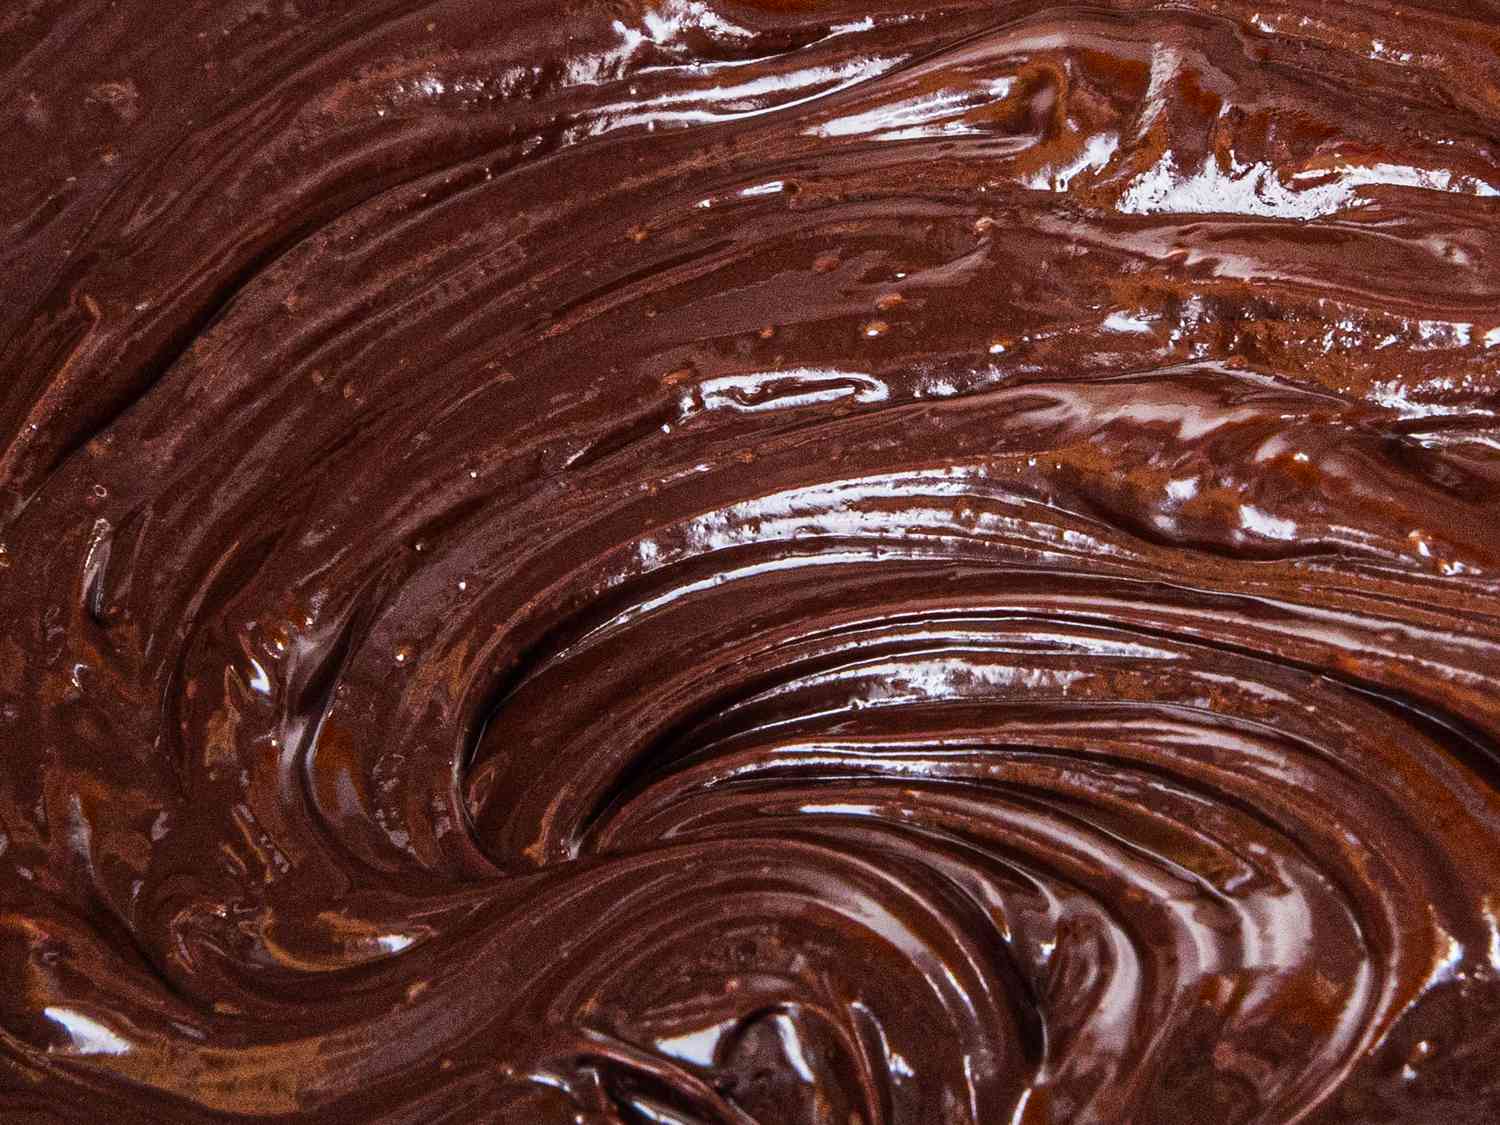 Close up of chocolate mixture